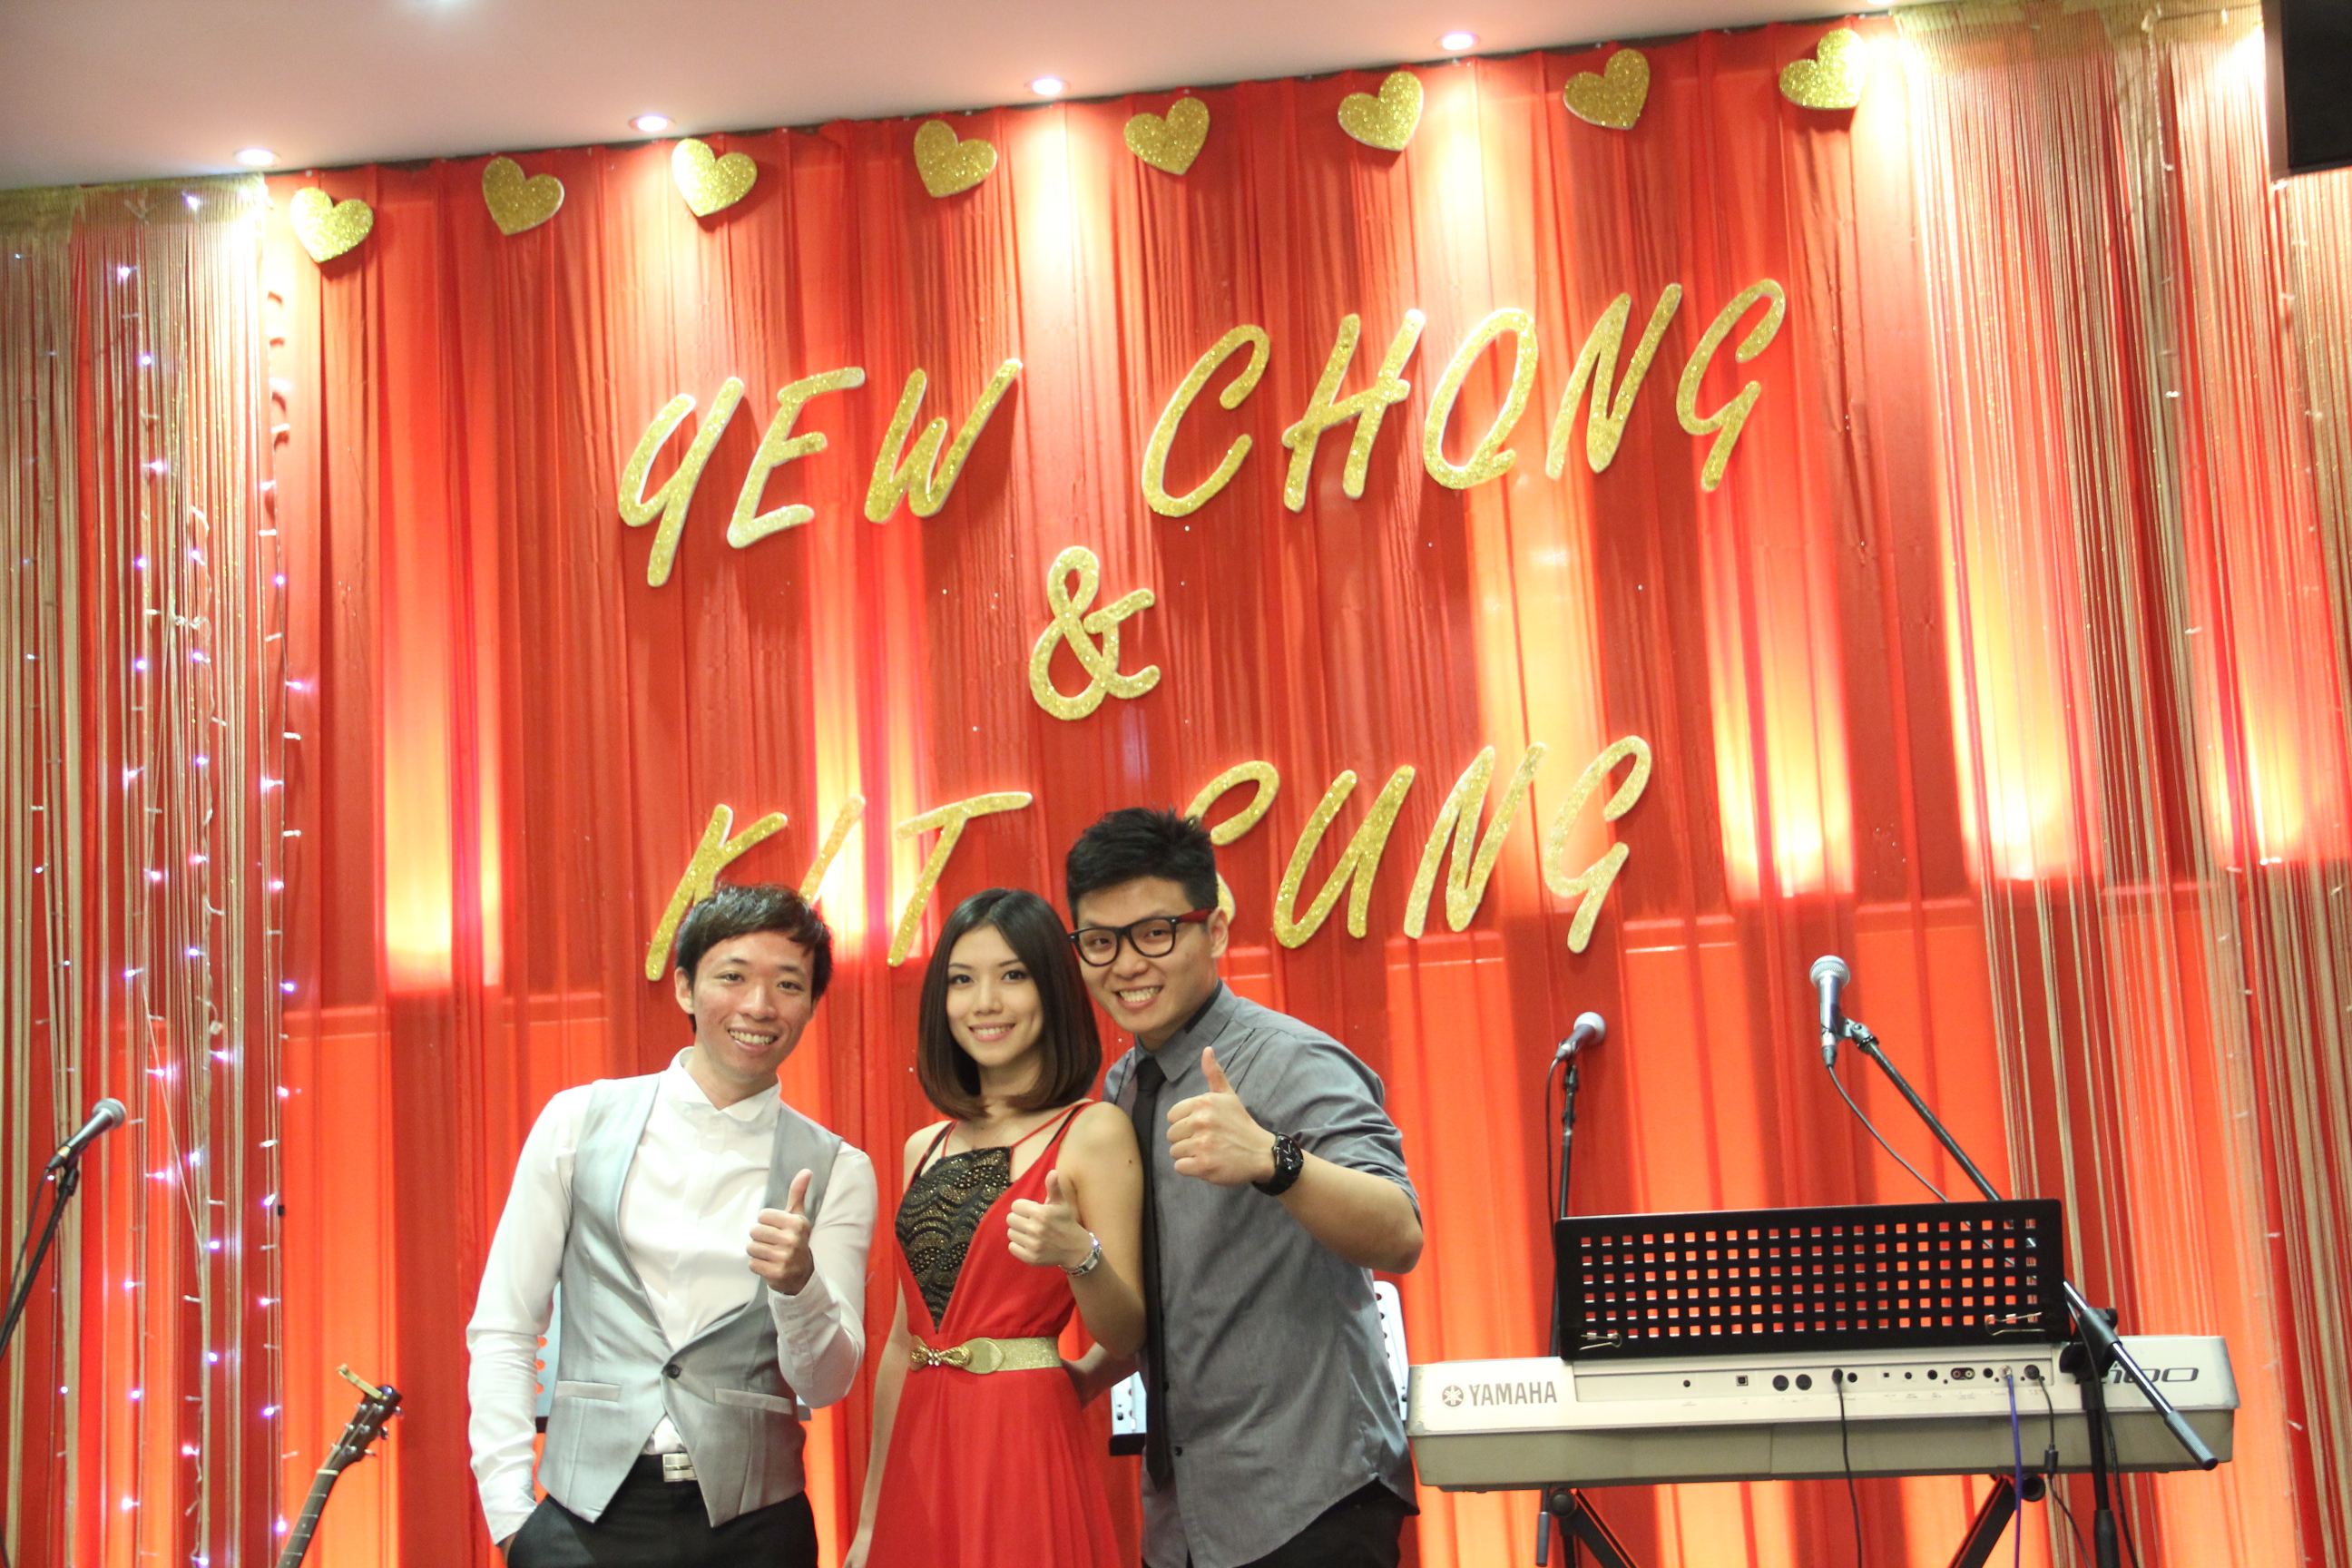 Yew Chong and Kit Sung’s wedding at Grand Palace, Pavilion KL (8th Dec 2013)